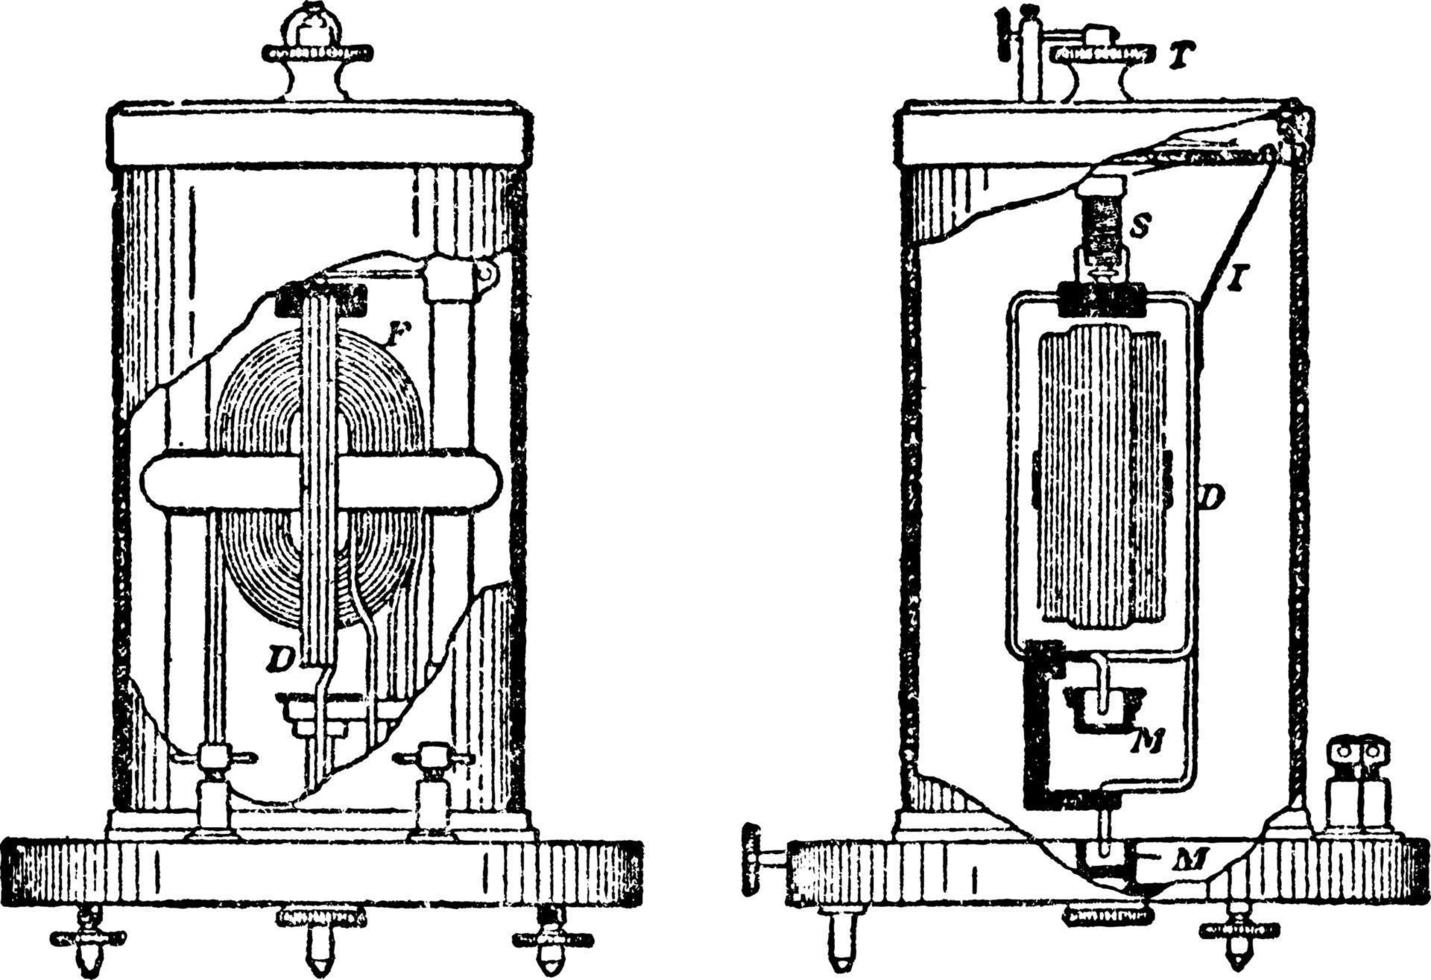 eletrodinamômetro siemens, ilustração vintage. vetor